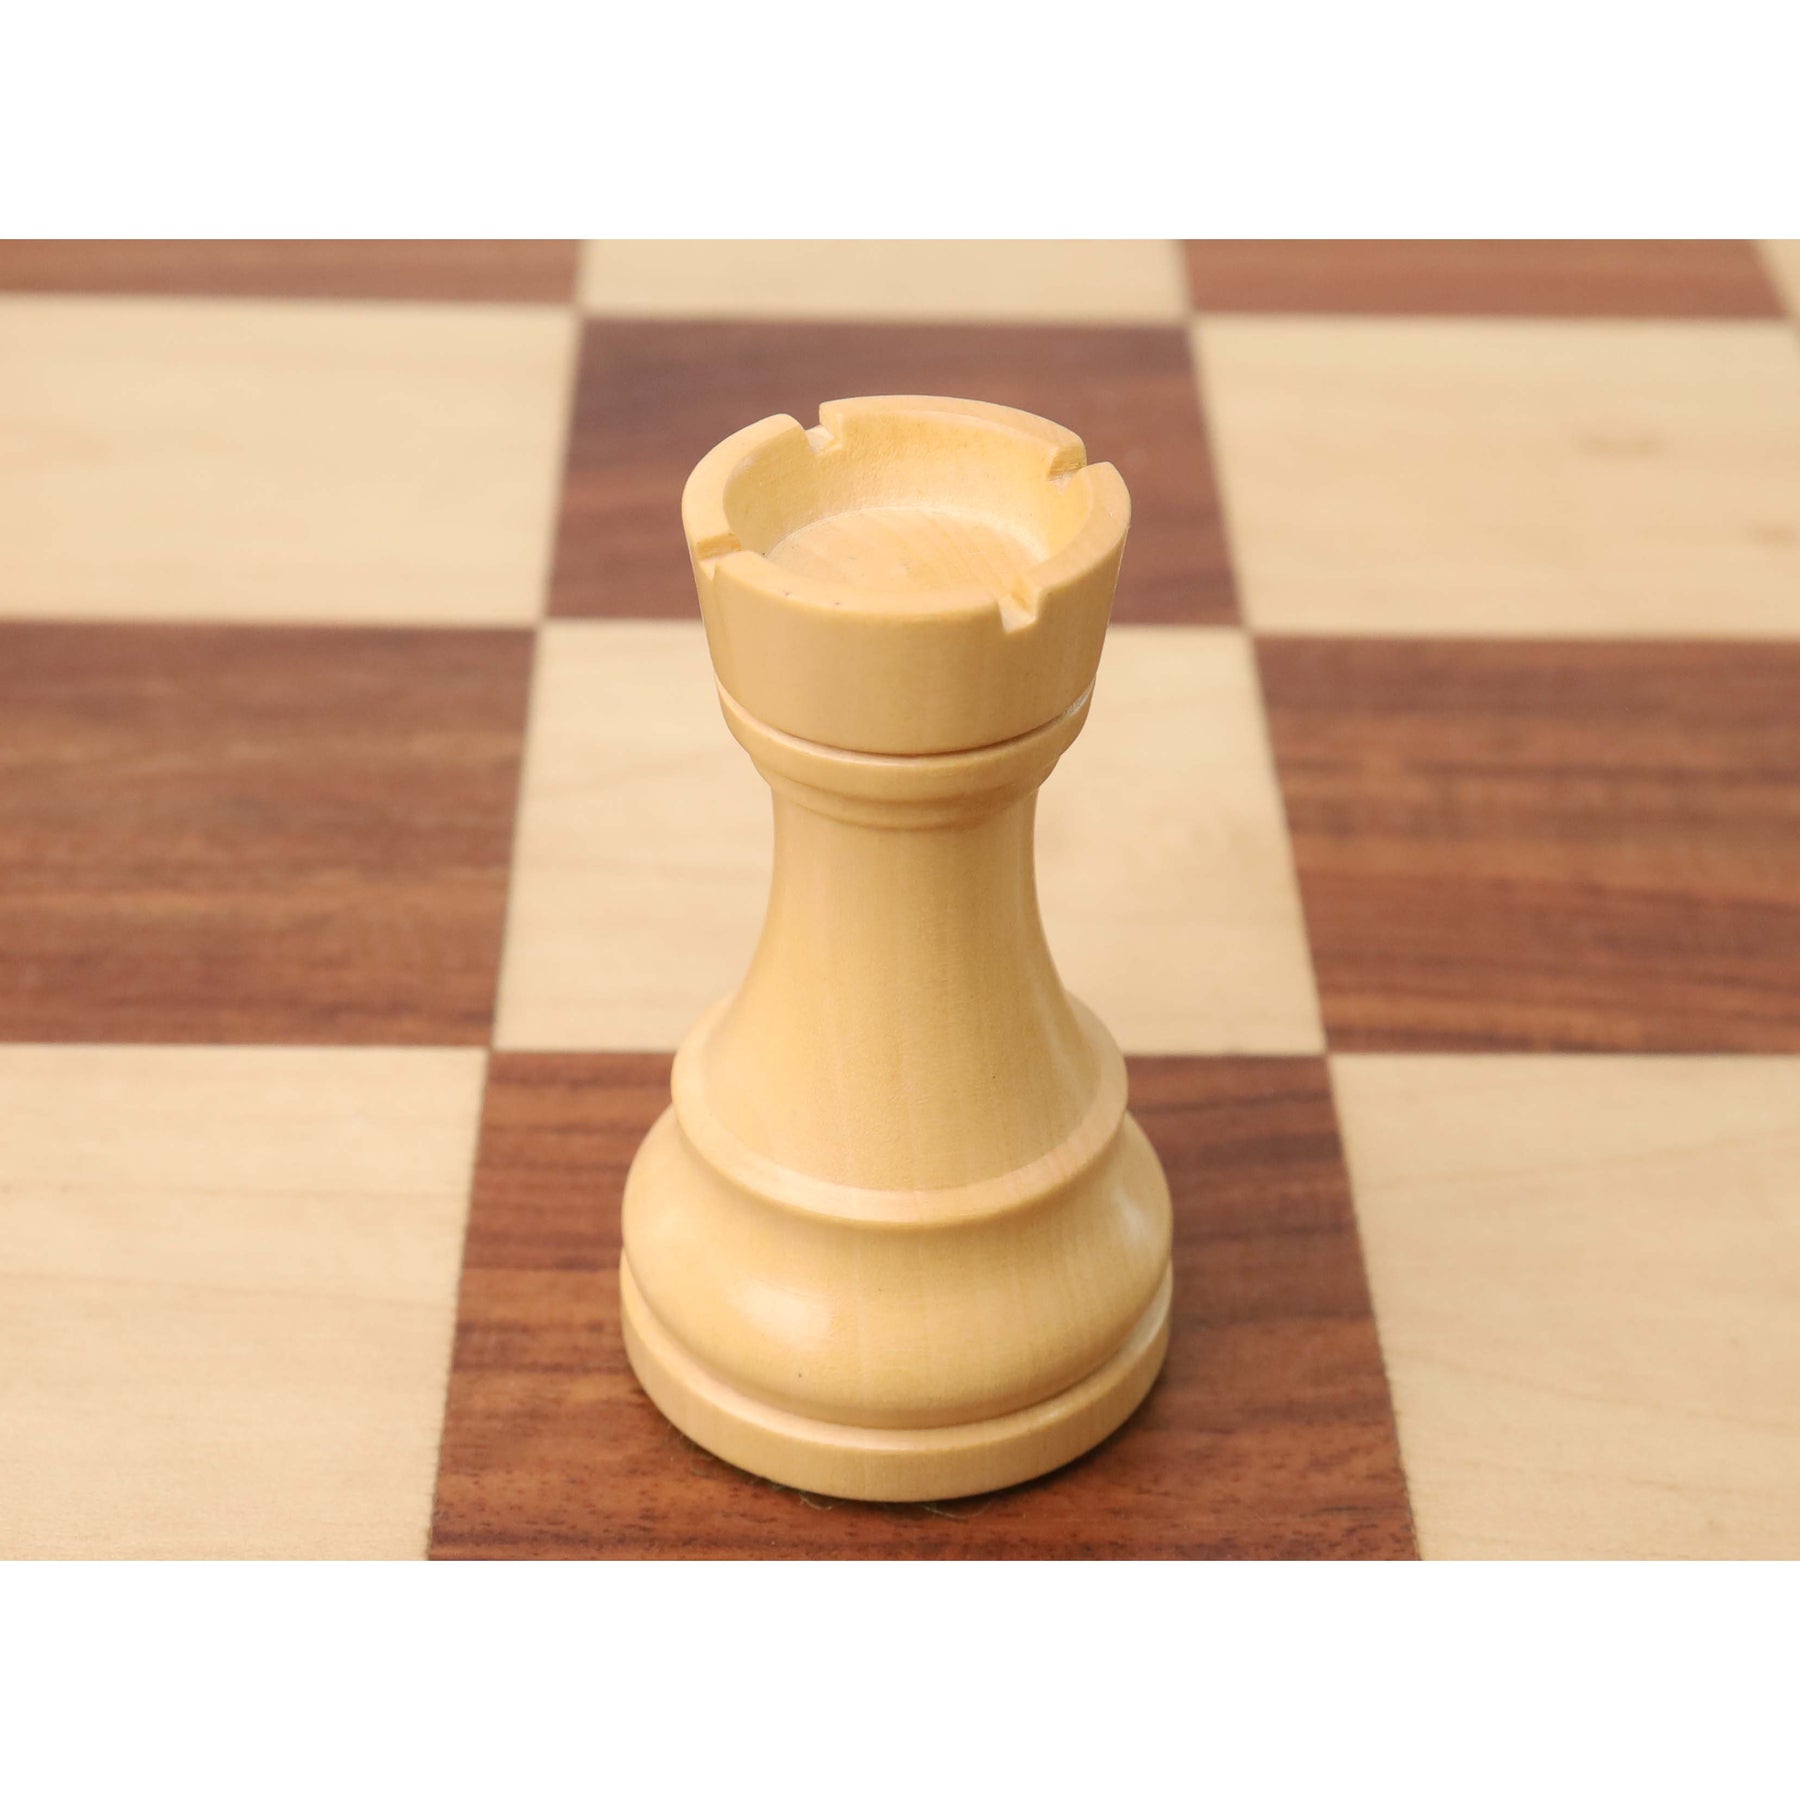 French Lardy Staunton Tournament Chess Set Pieces with Free